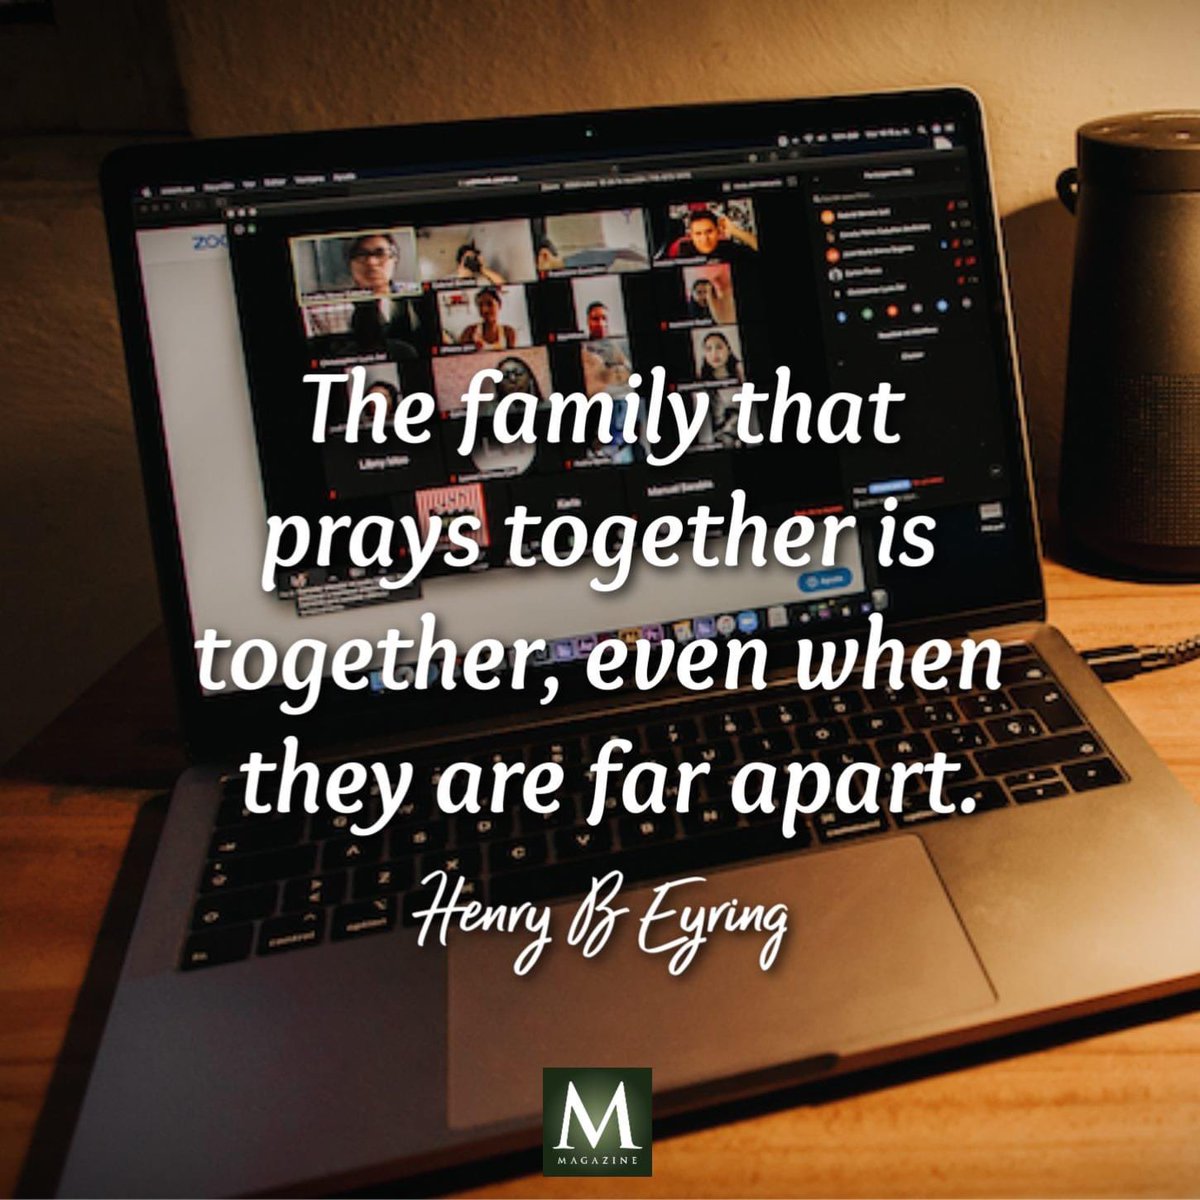 'The family that prays together is together, even when they are far apart.' ~ President Henry B. Eyring 

#FamilyPrayer #PowerOfPrayer #TrustGod #ShareGoodness #ChildrenOfGod #GodLovesYou #CountOnHim #WordOfGod #HearHim #ComeUntoChrist #TheChurchOfJesusChristOfLatterDaySaints